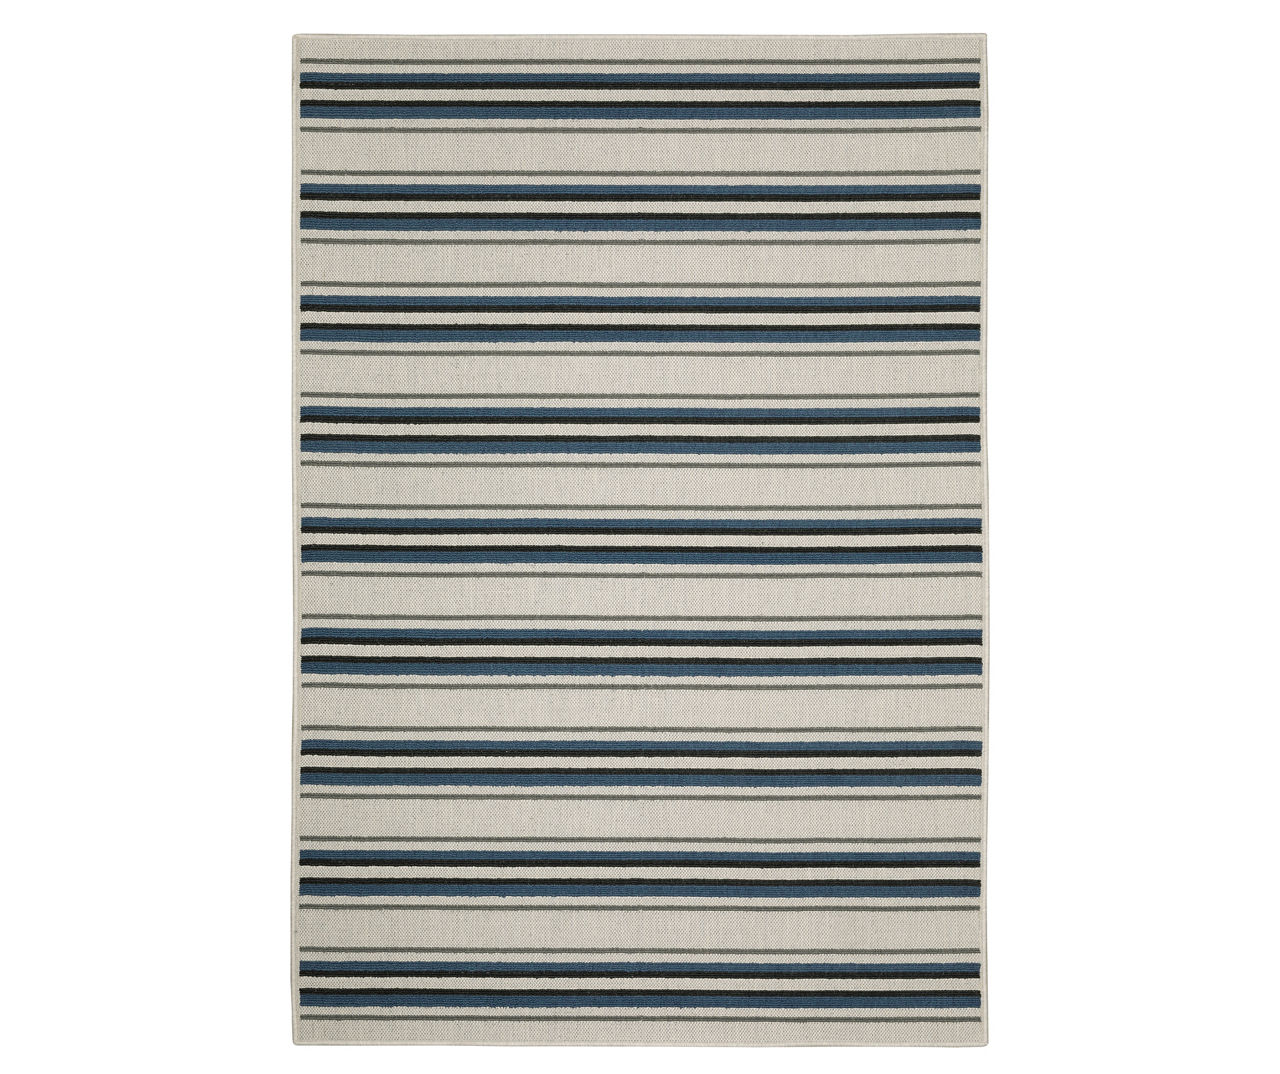 Torie Beige & Blue Stripe Outdoor Area Rug, (6.7' x 9.2')